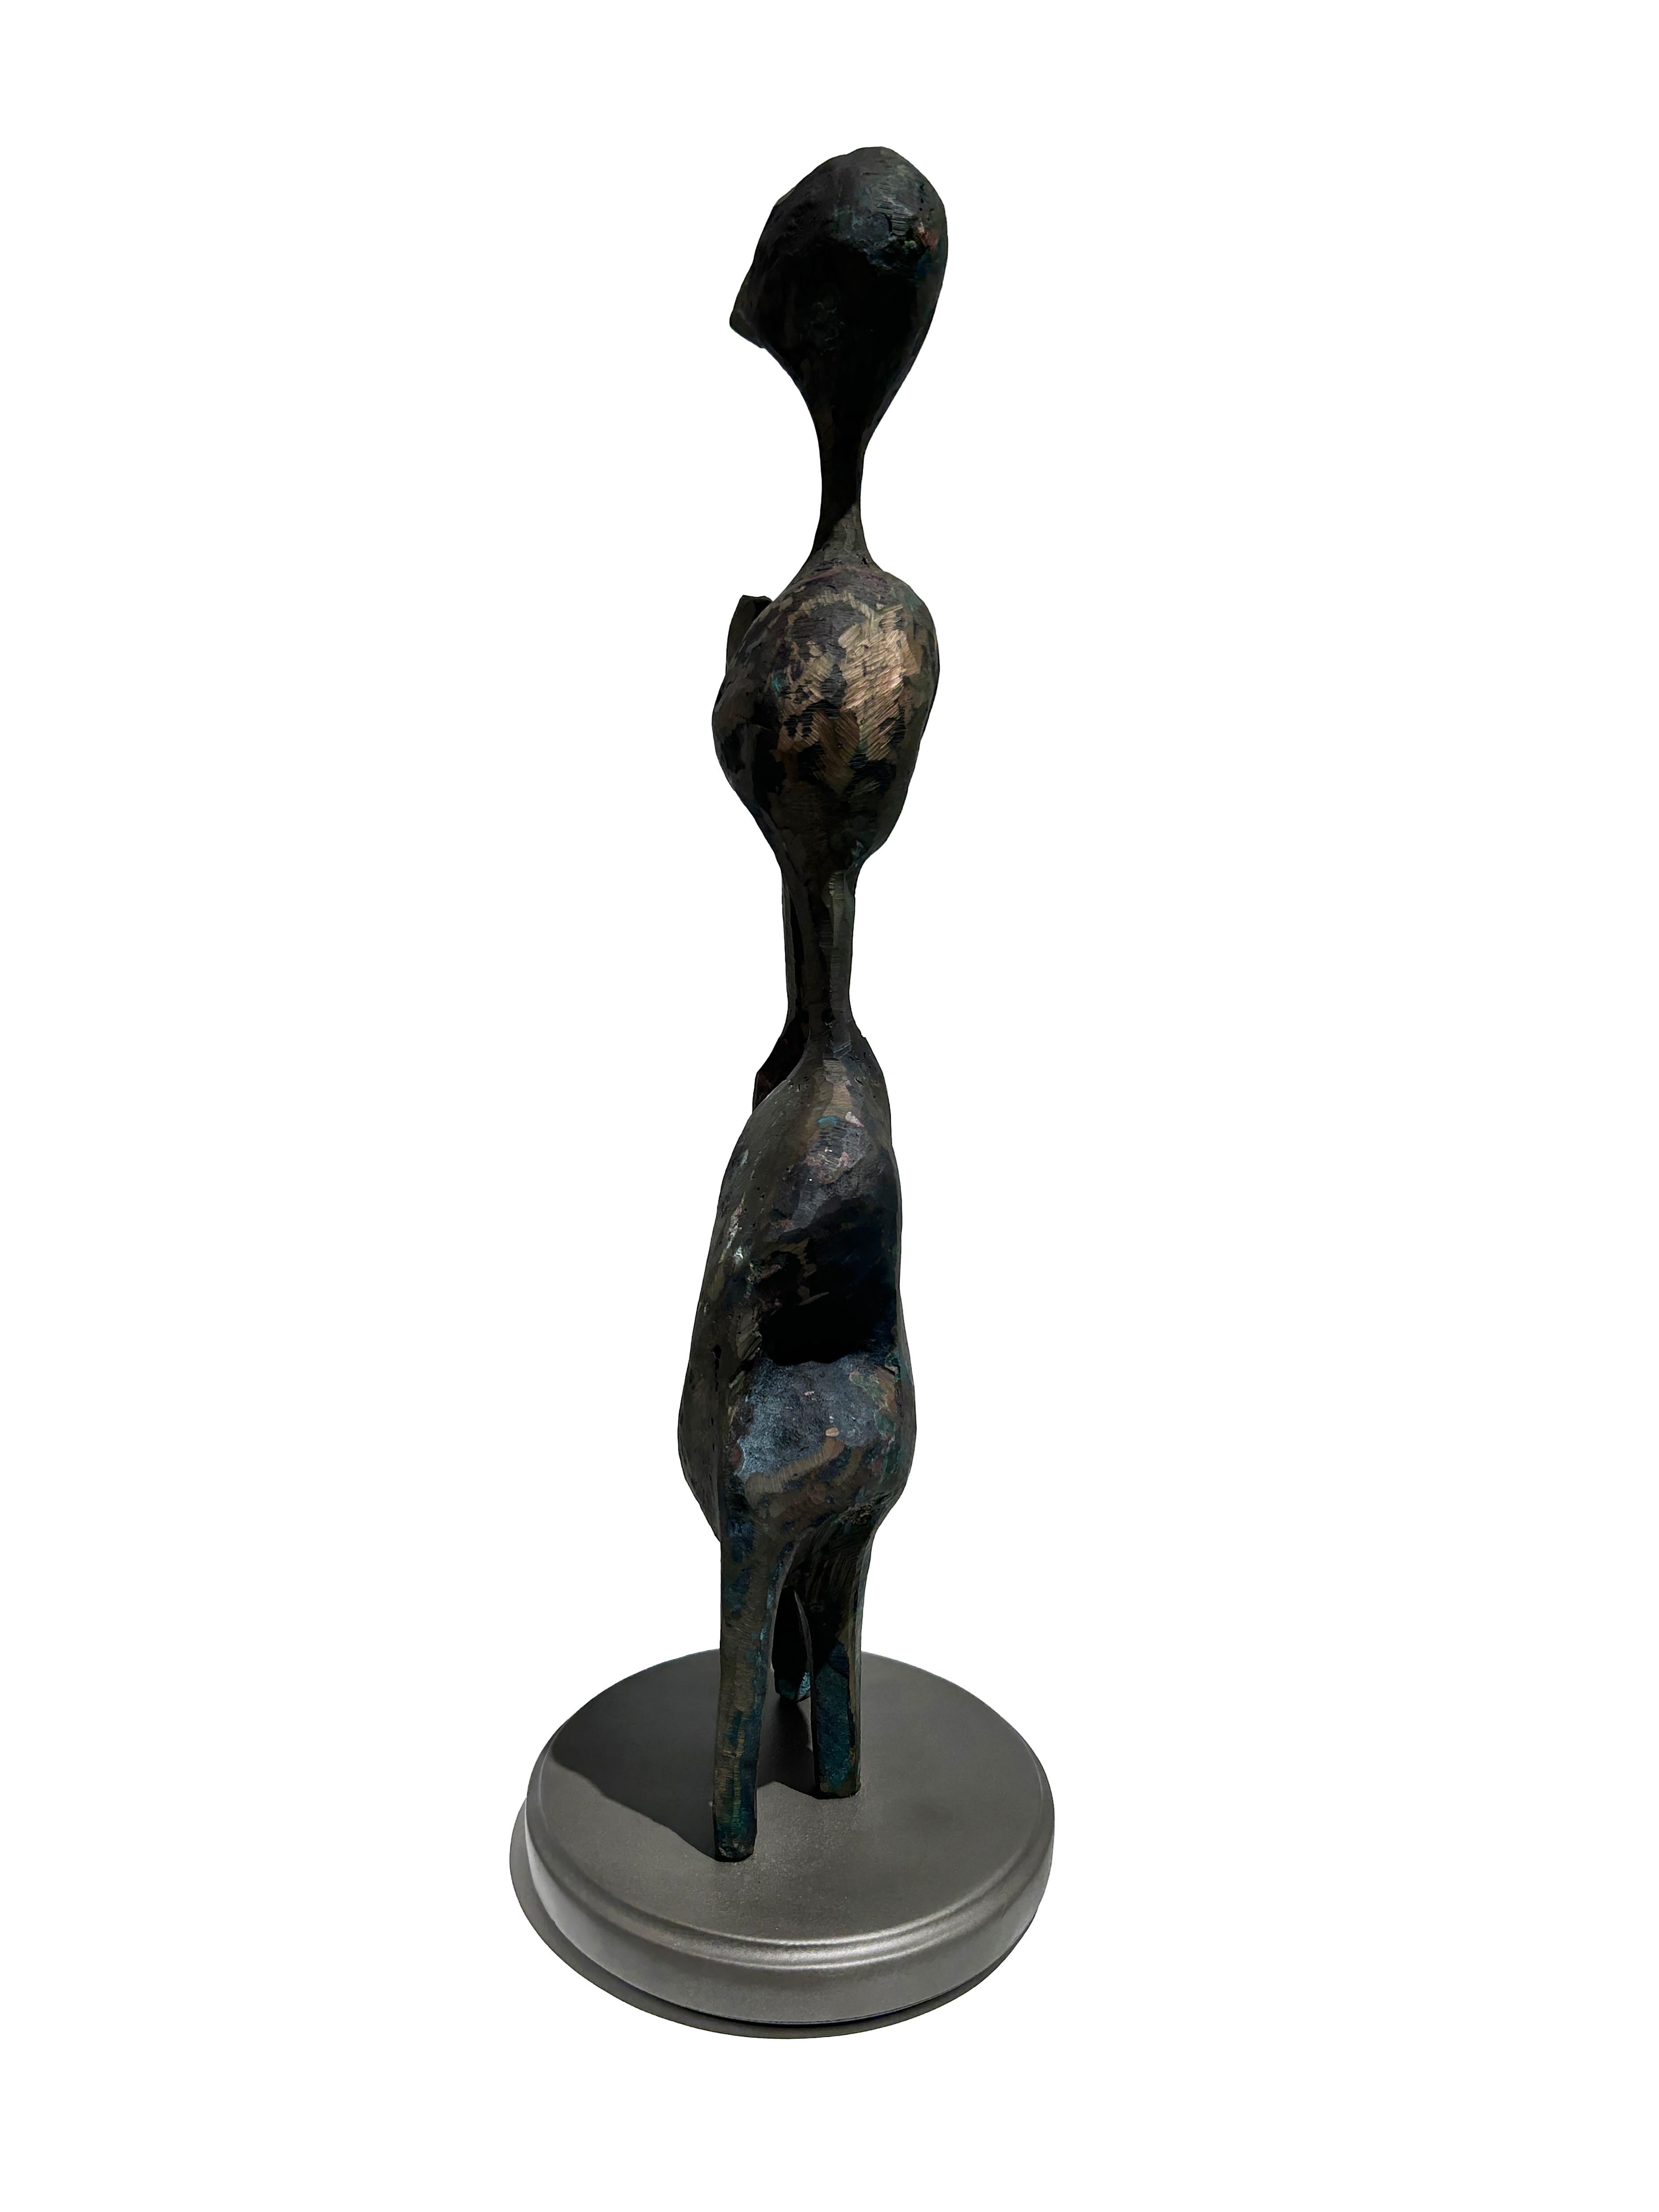 David Hayes (1931 - 2013)
Griffon, circa 1963
Bronze sculpture with black patina
28 x 8 x 4 in